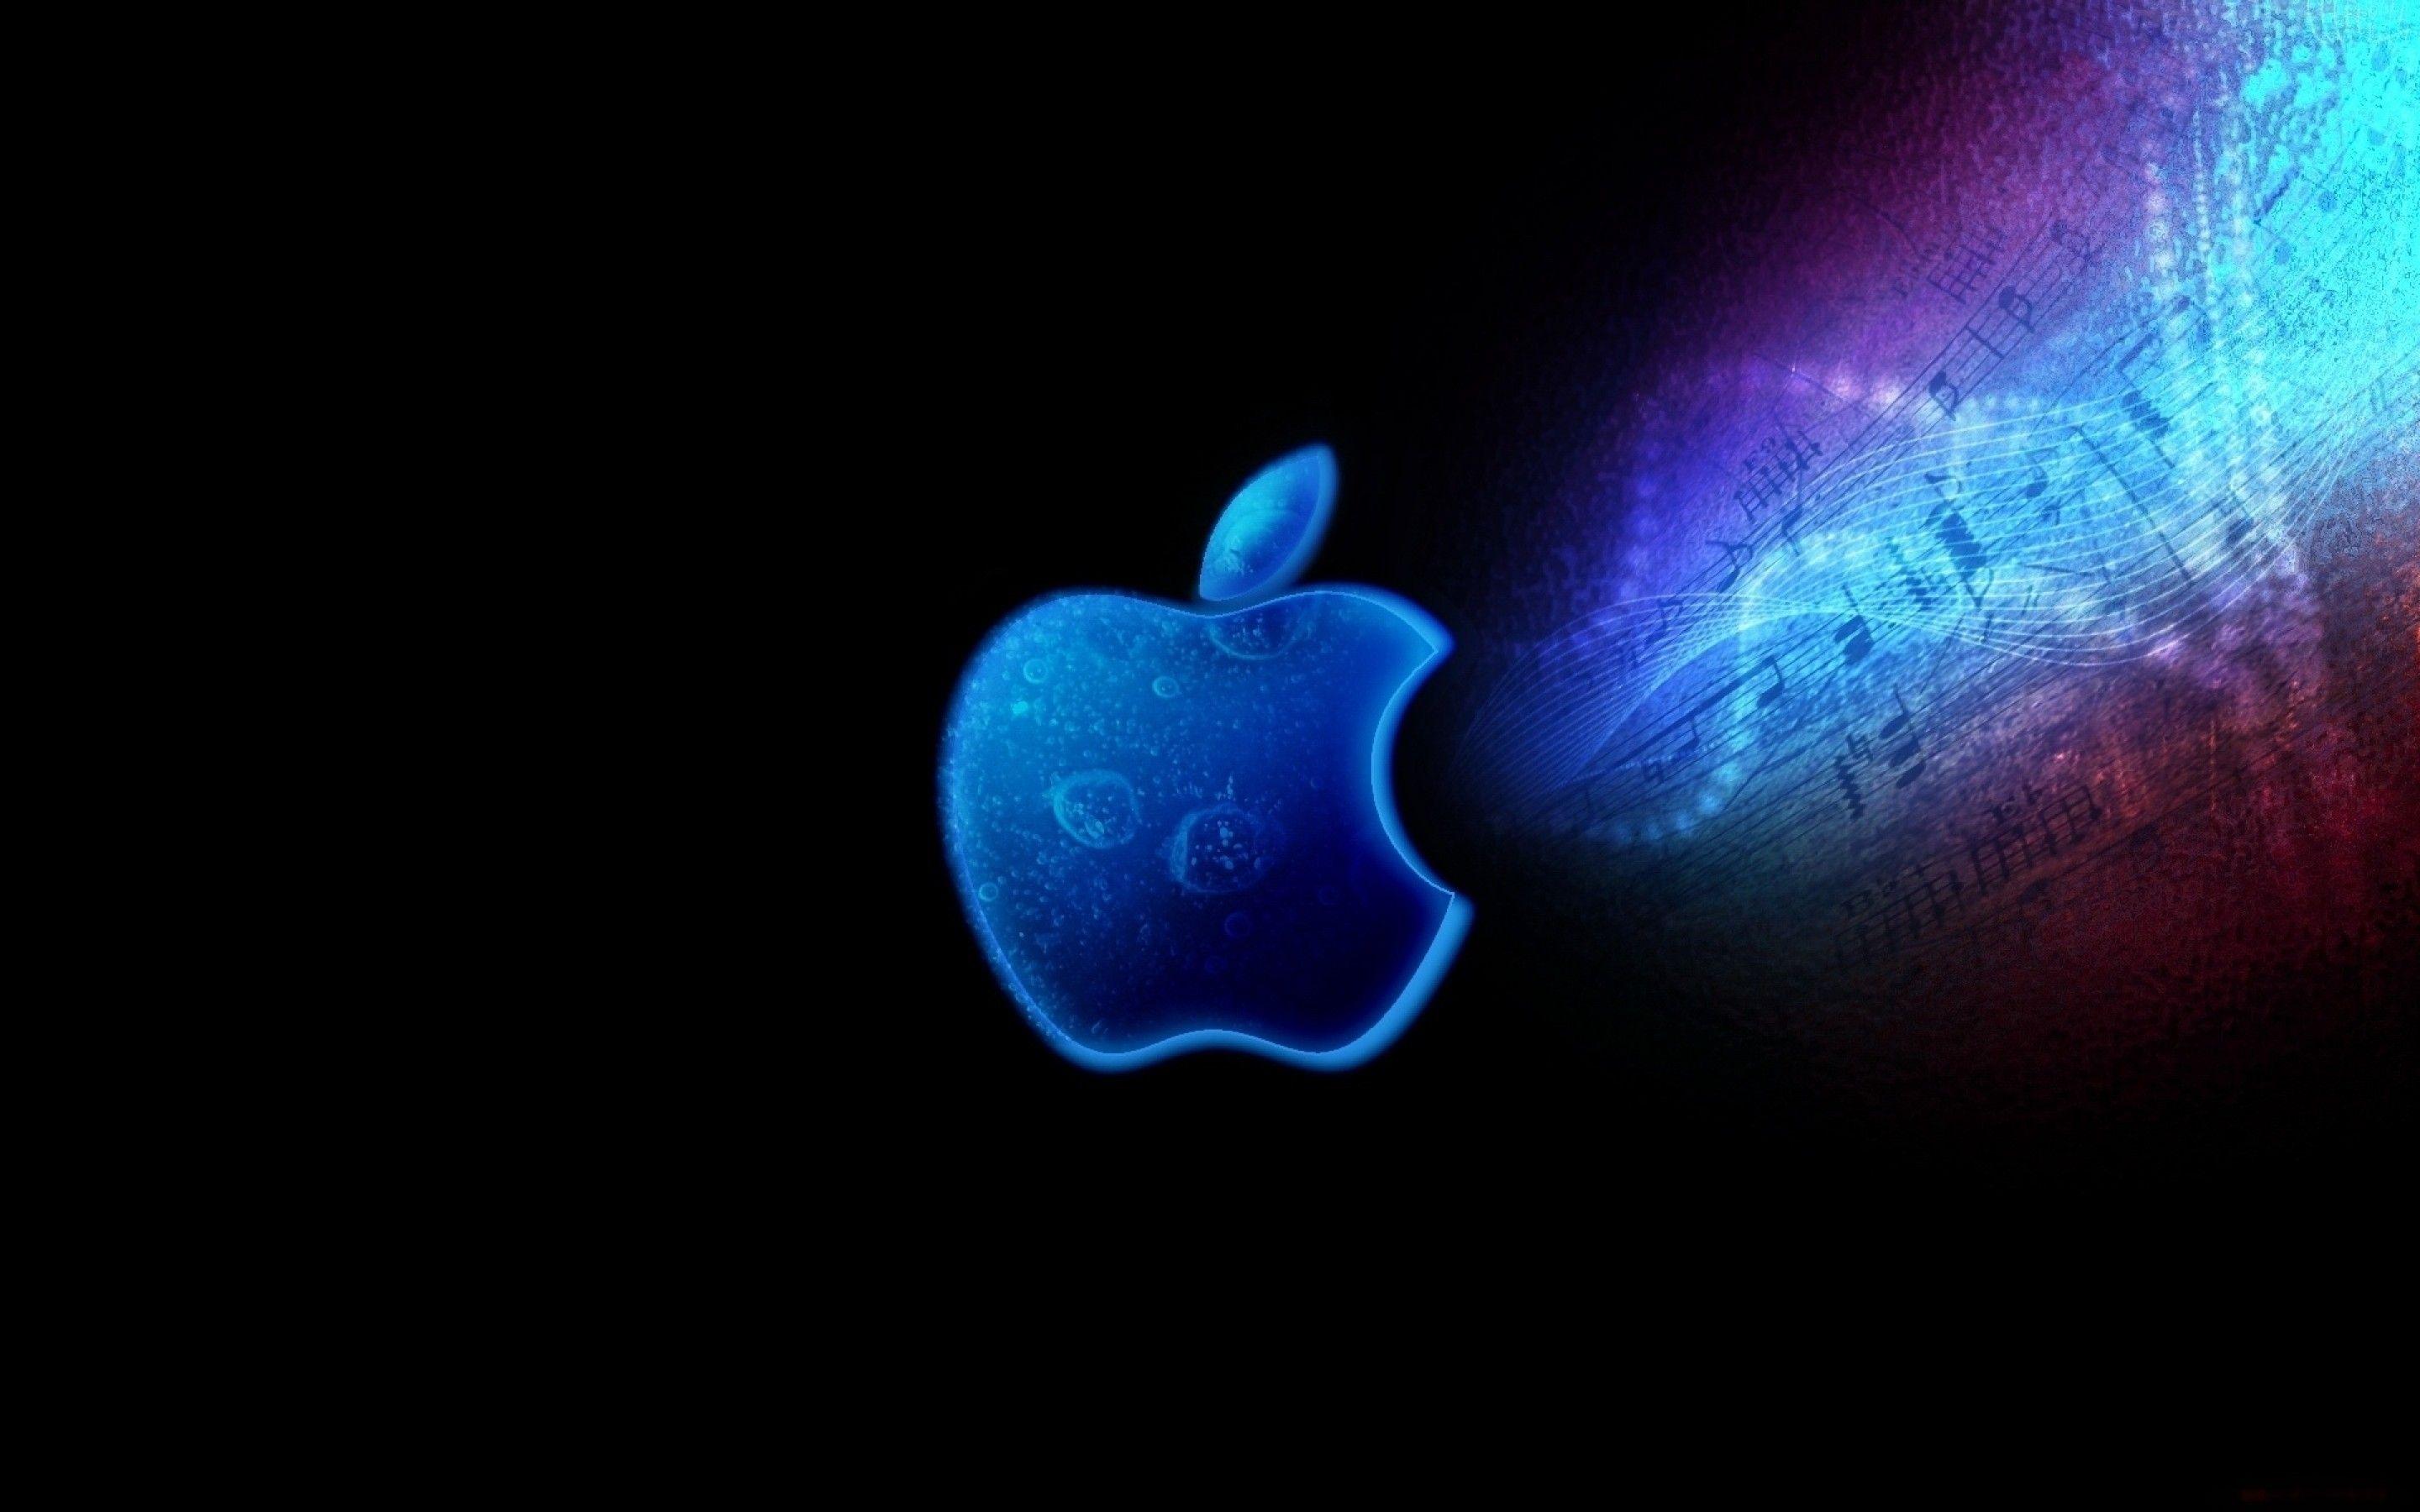 Neon Apple Logo Wallpapers - Top Free Neon Apple Logo Backgrounds ...